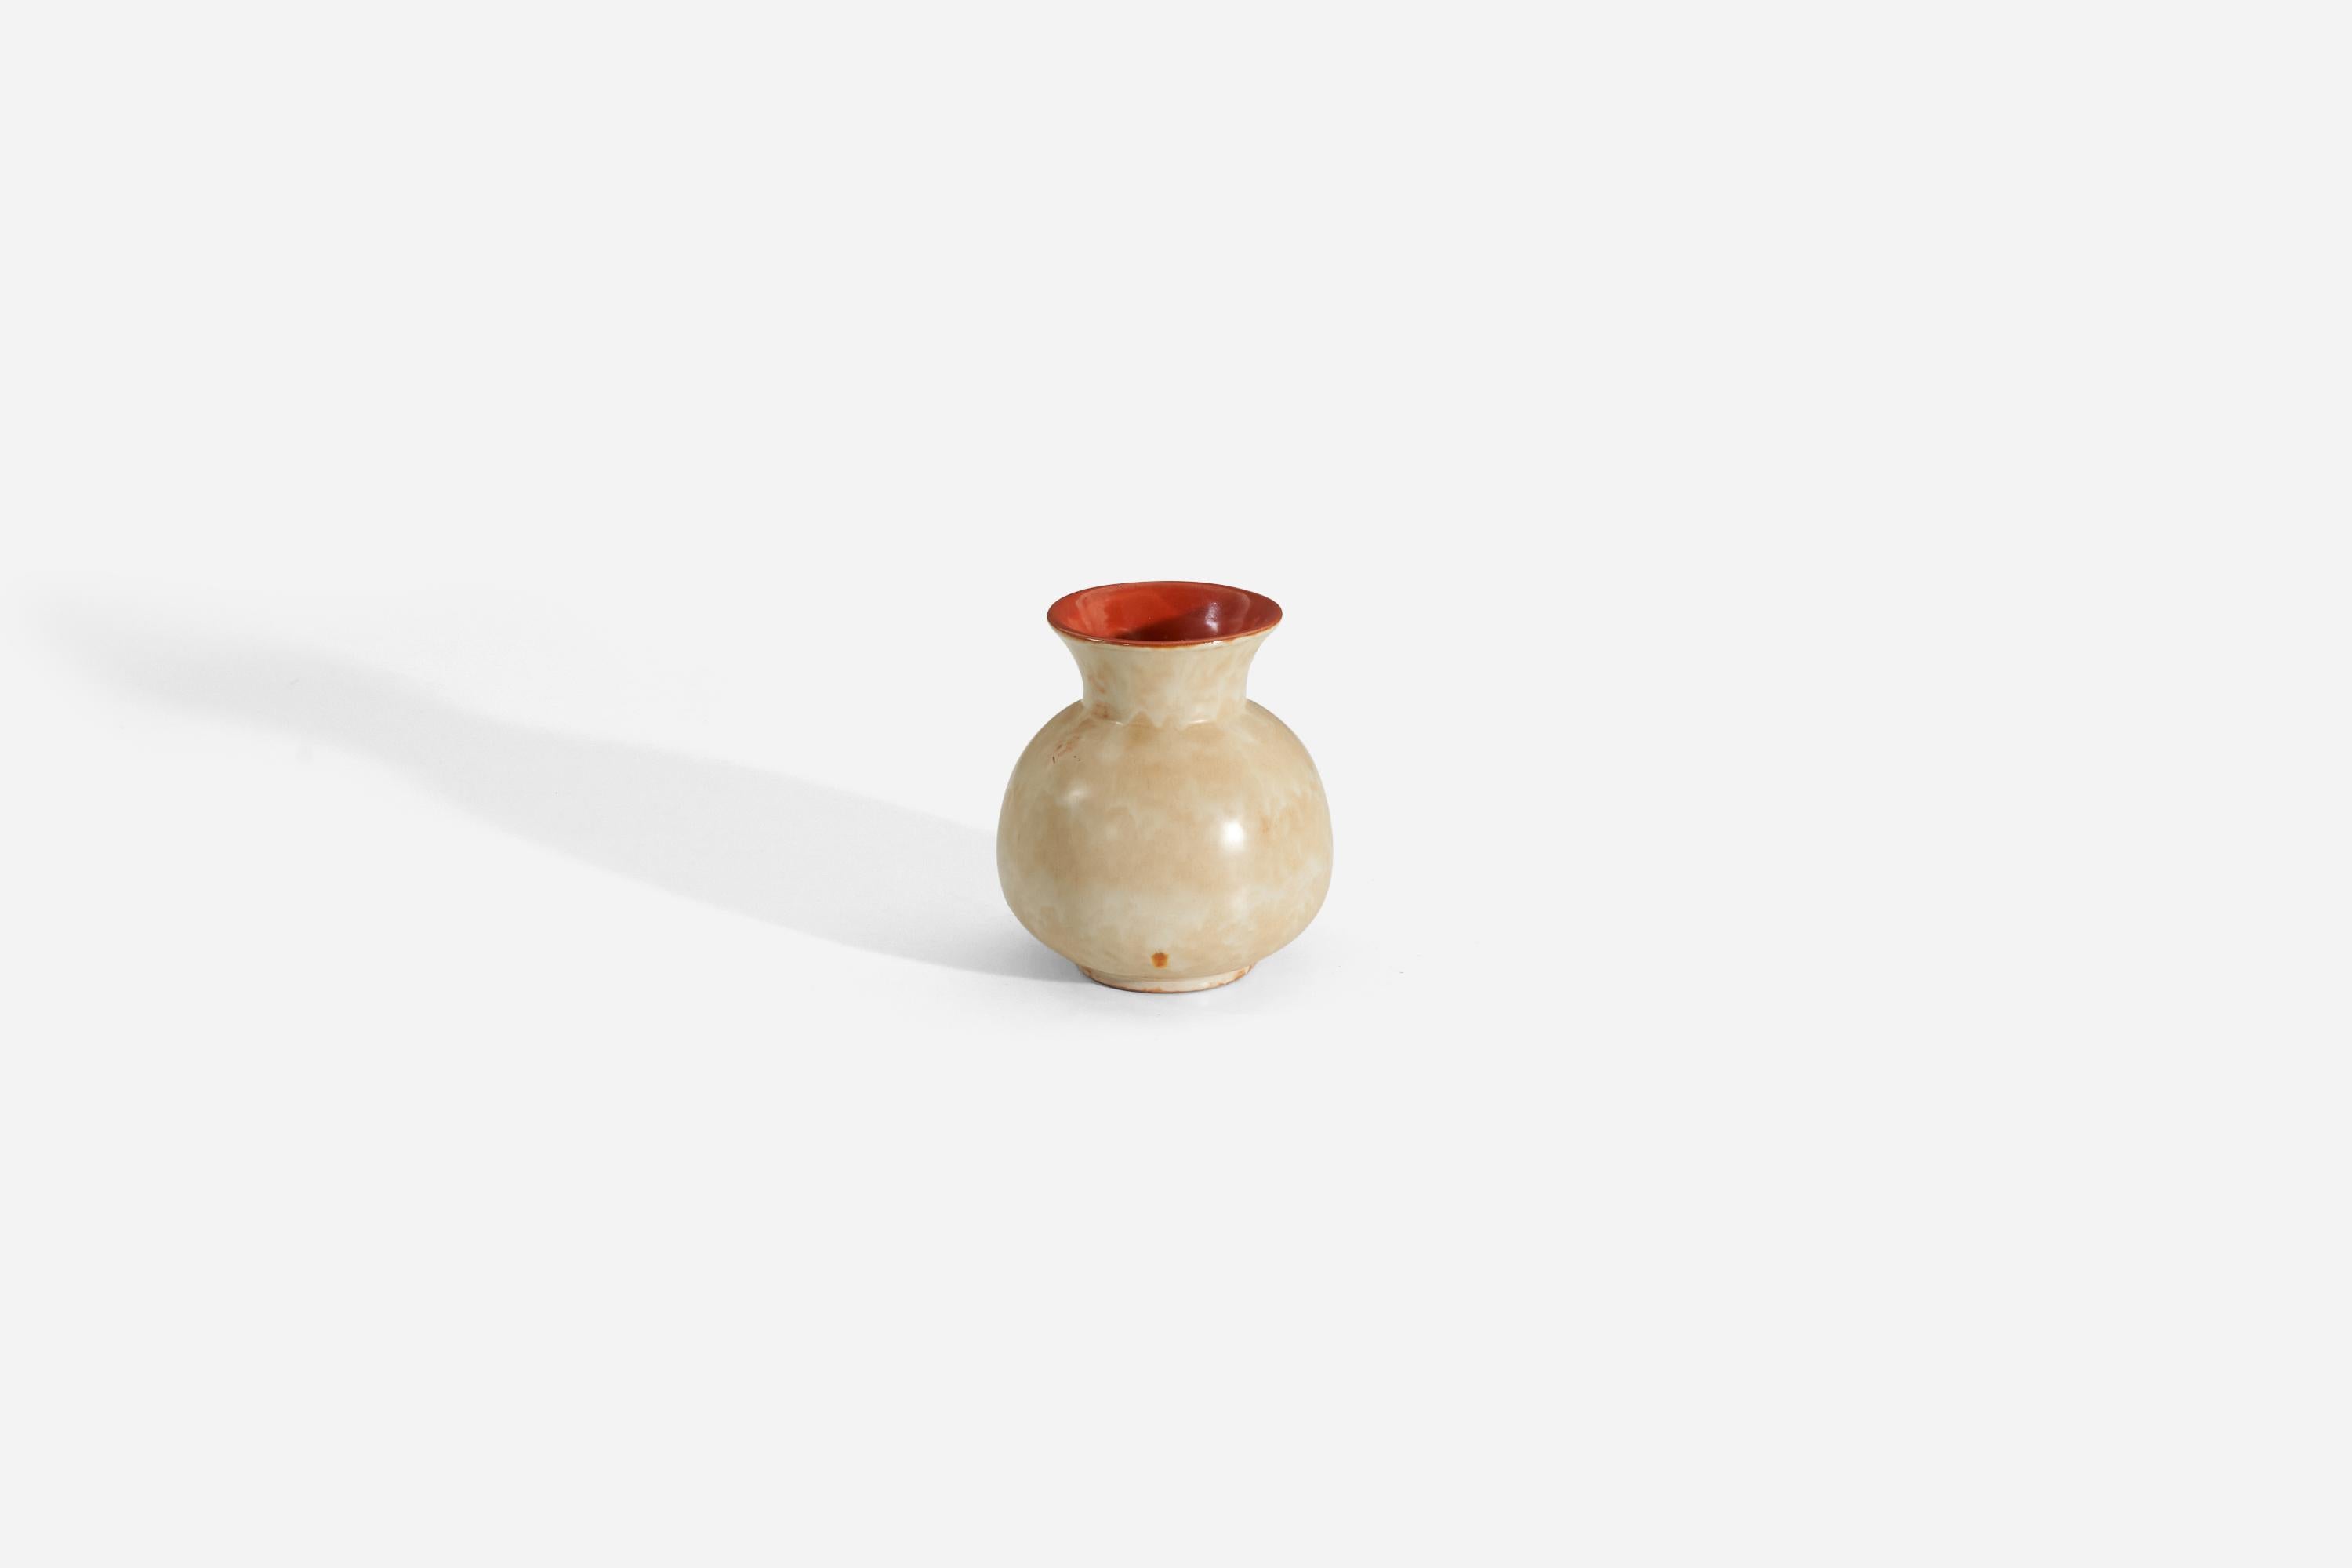 A beige and orange-glazed earthenware vase produced by Upsala-Ekeby, Sweden, 1940s.

